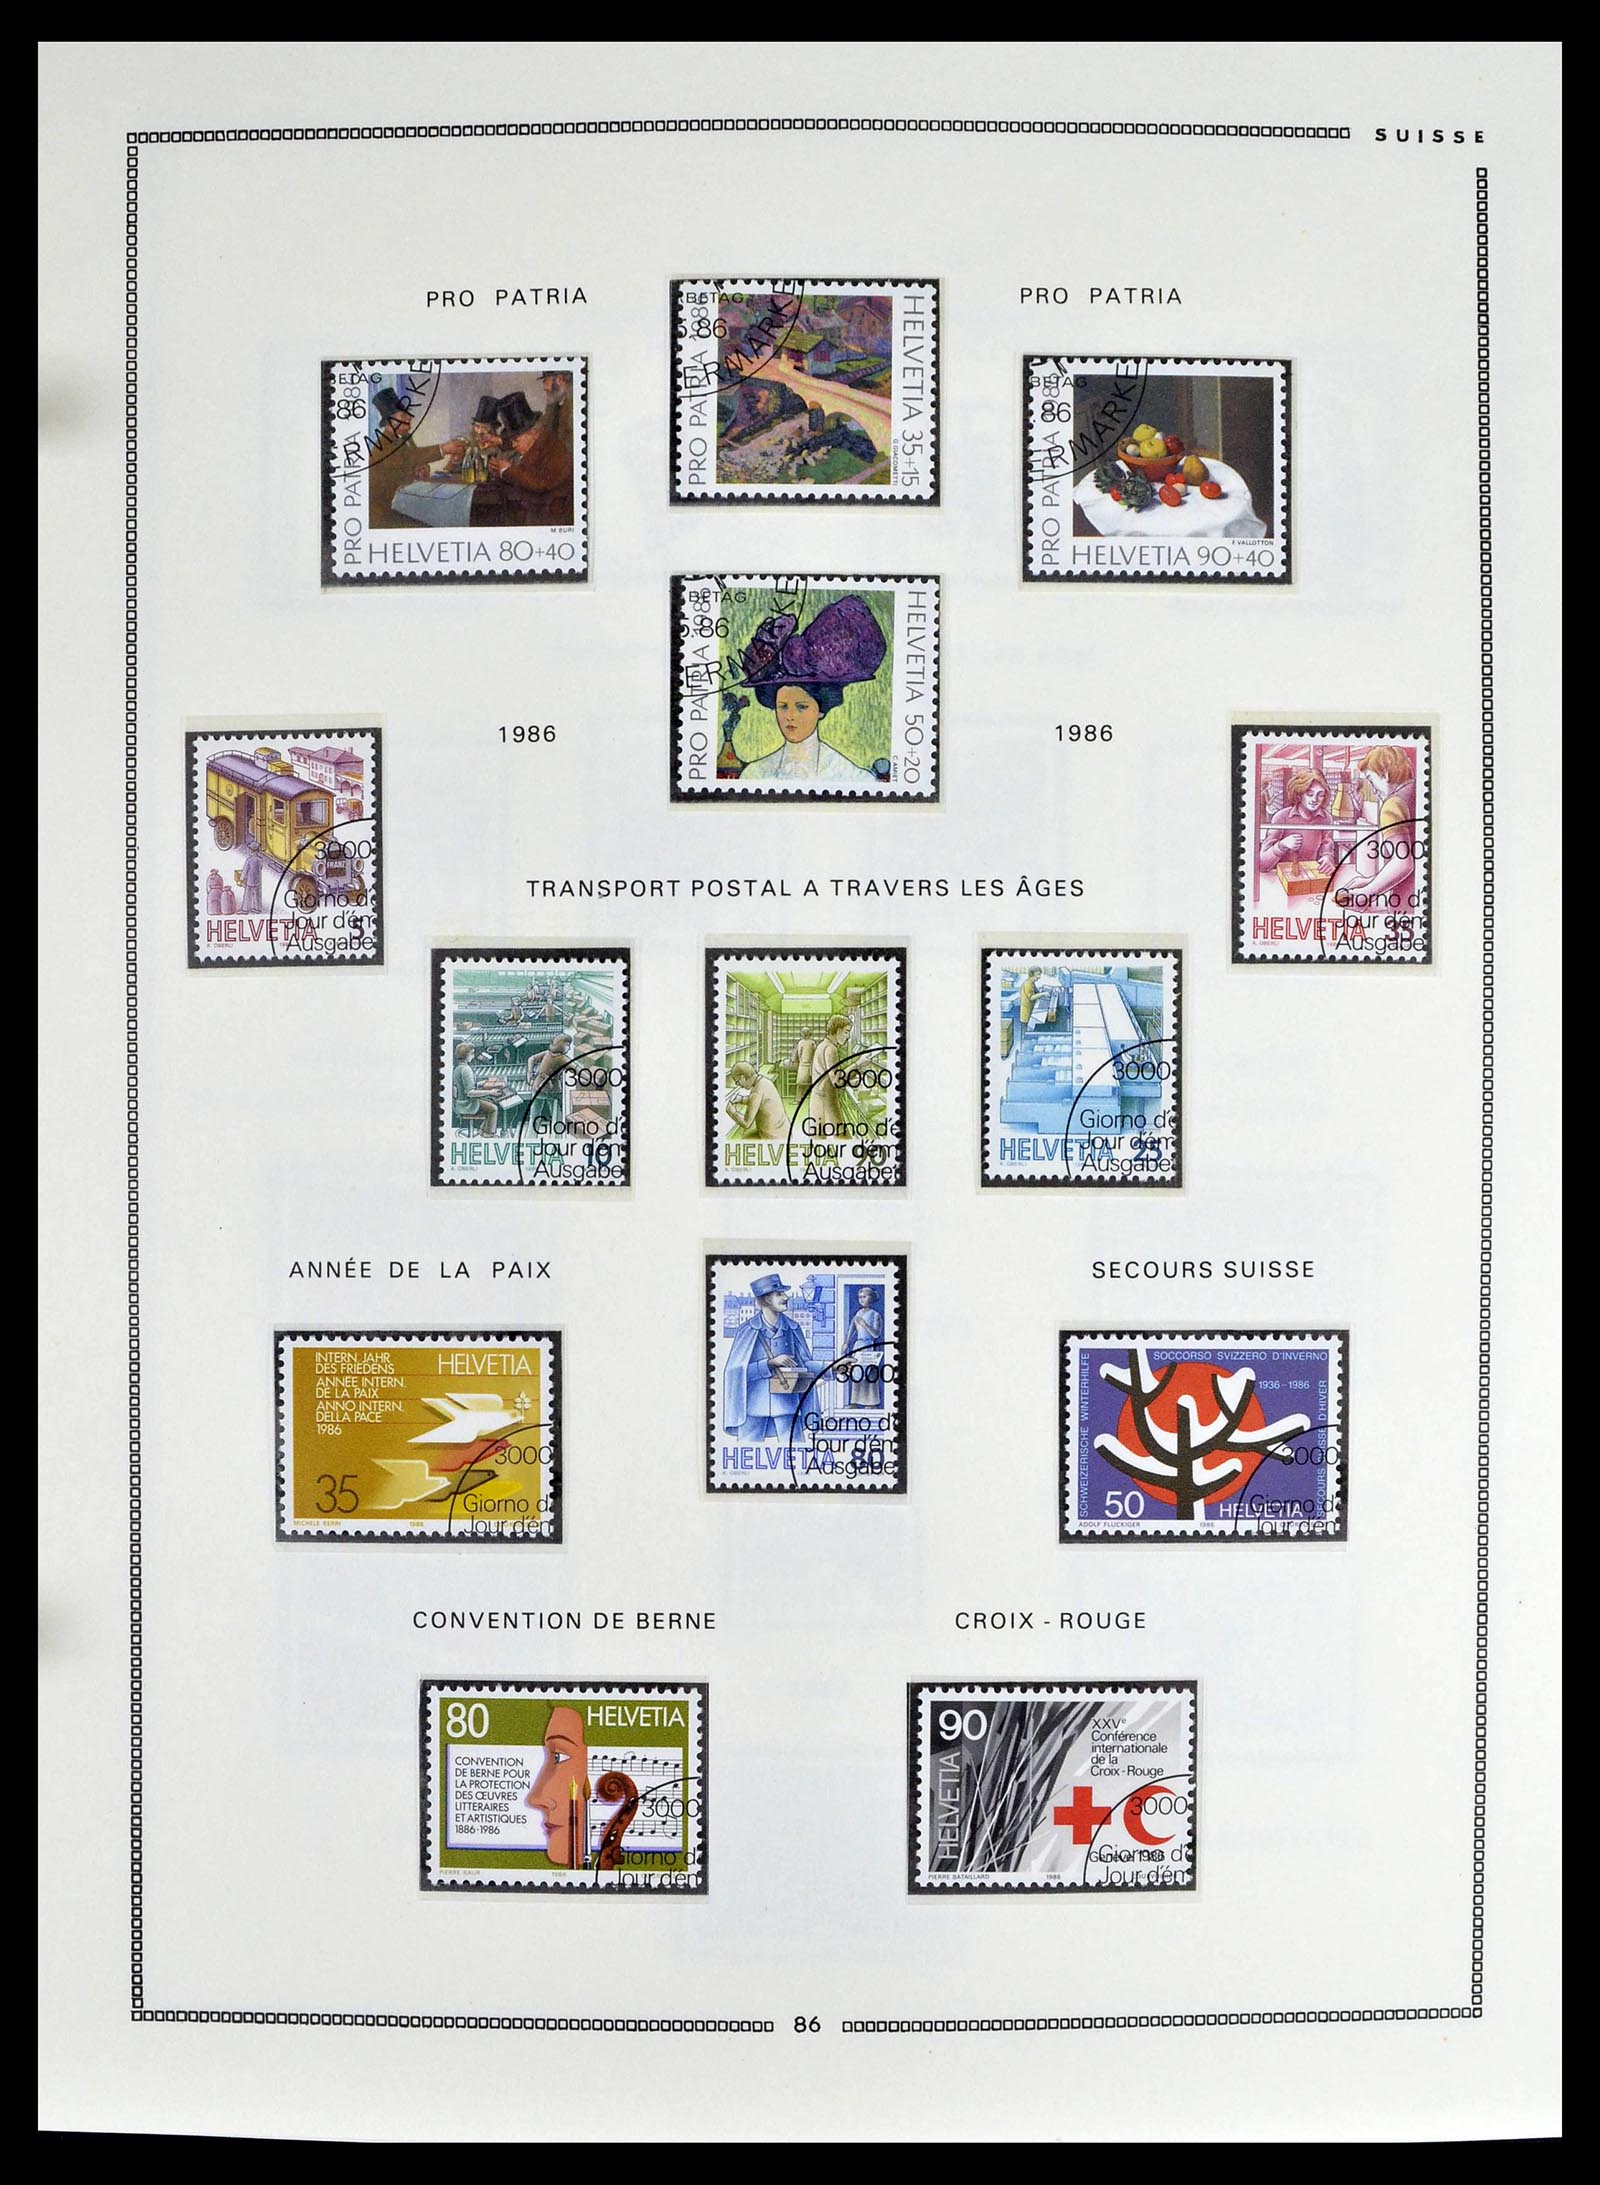 39094 0084 - Stamp collection 39094 Switzerland 1850-2005.